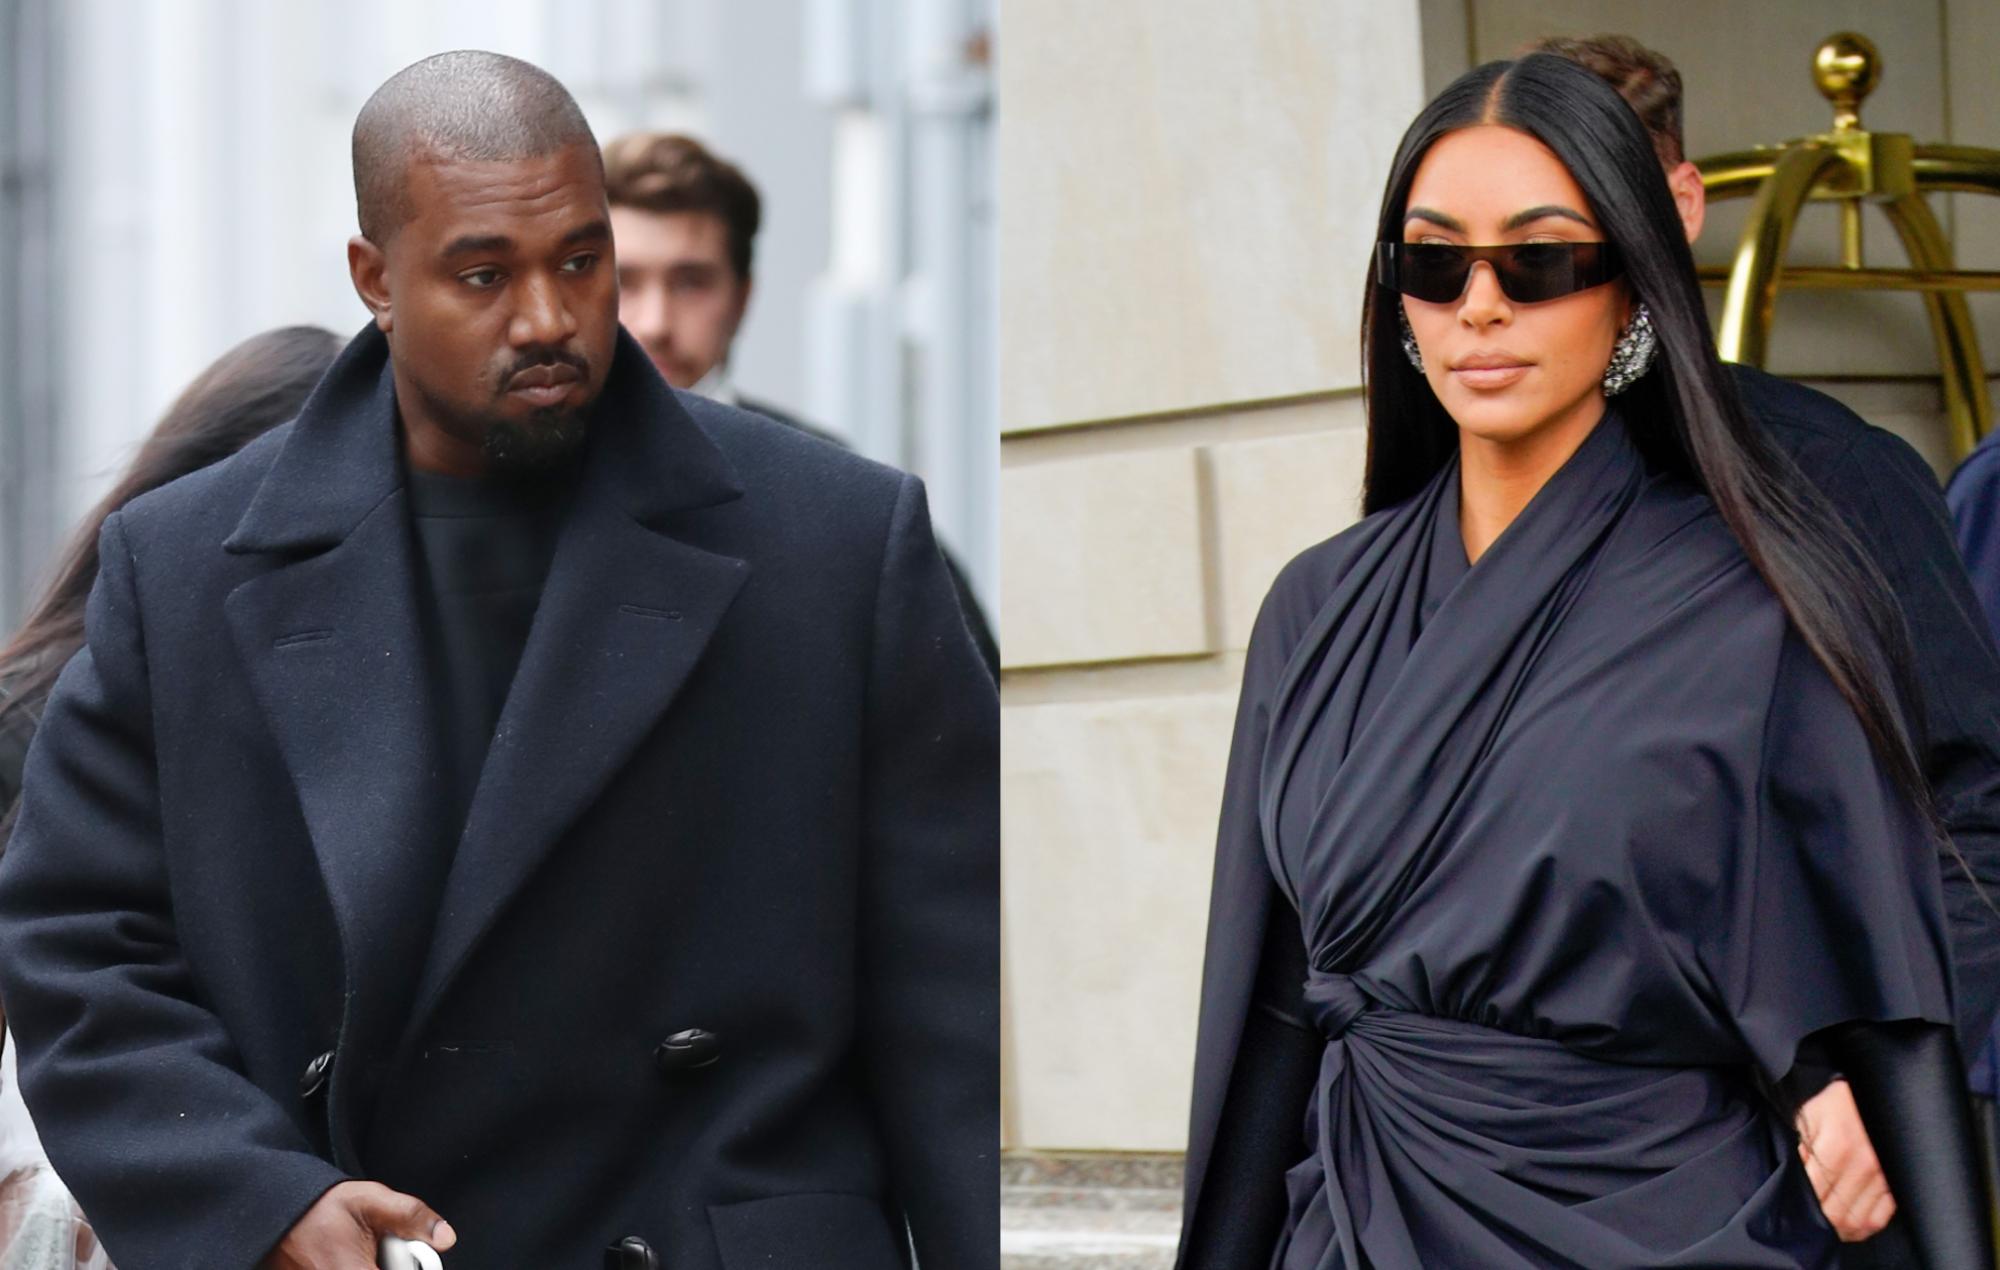 Kim Kardashian critica los "constantes ataques" de Kanye West hacia ella